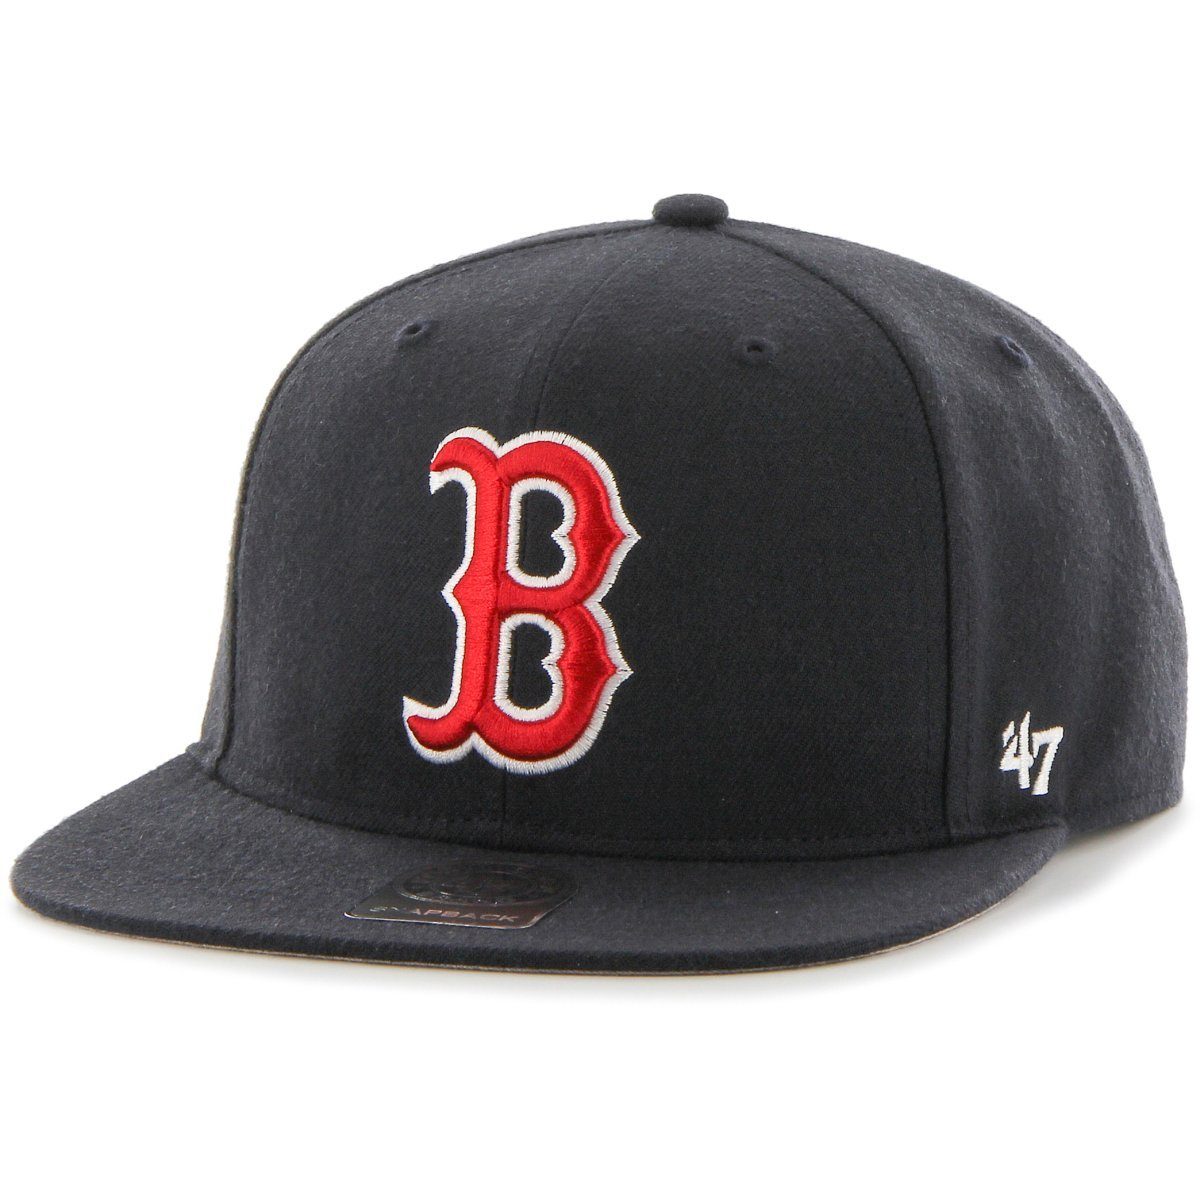 '47 Brand Snapback Cap NO SHOT Boston Red Sox